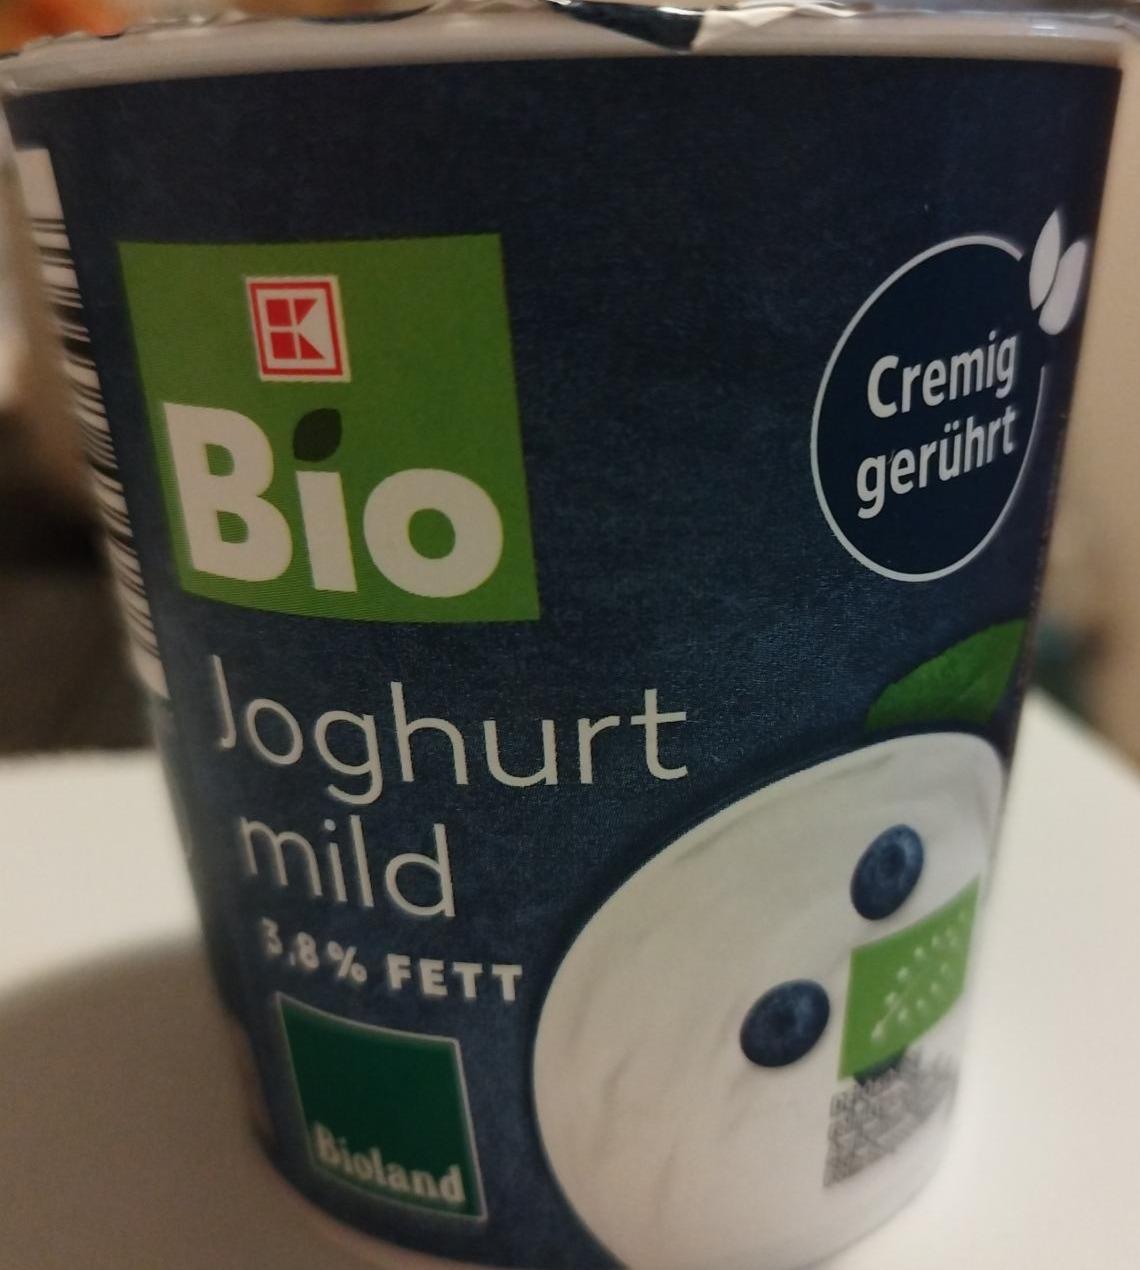 K-Bio kalórie, a - hodnoty kJ Joghurt 3,8% fett mild nutričné